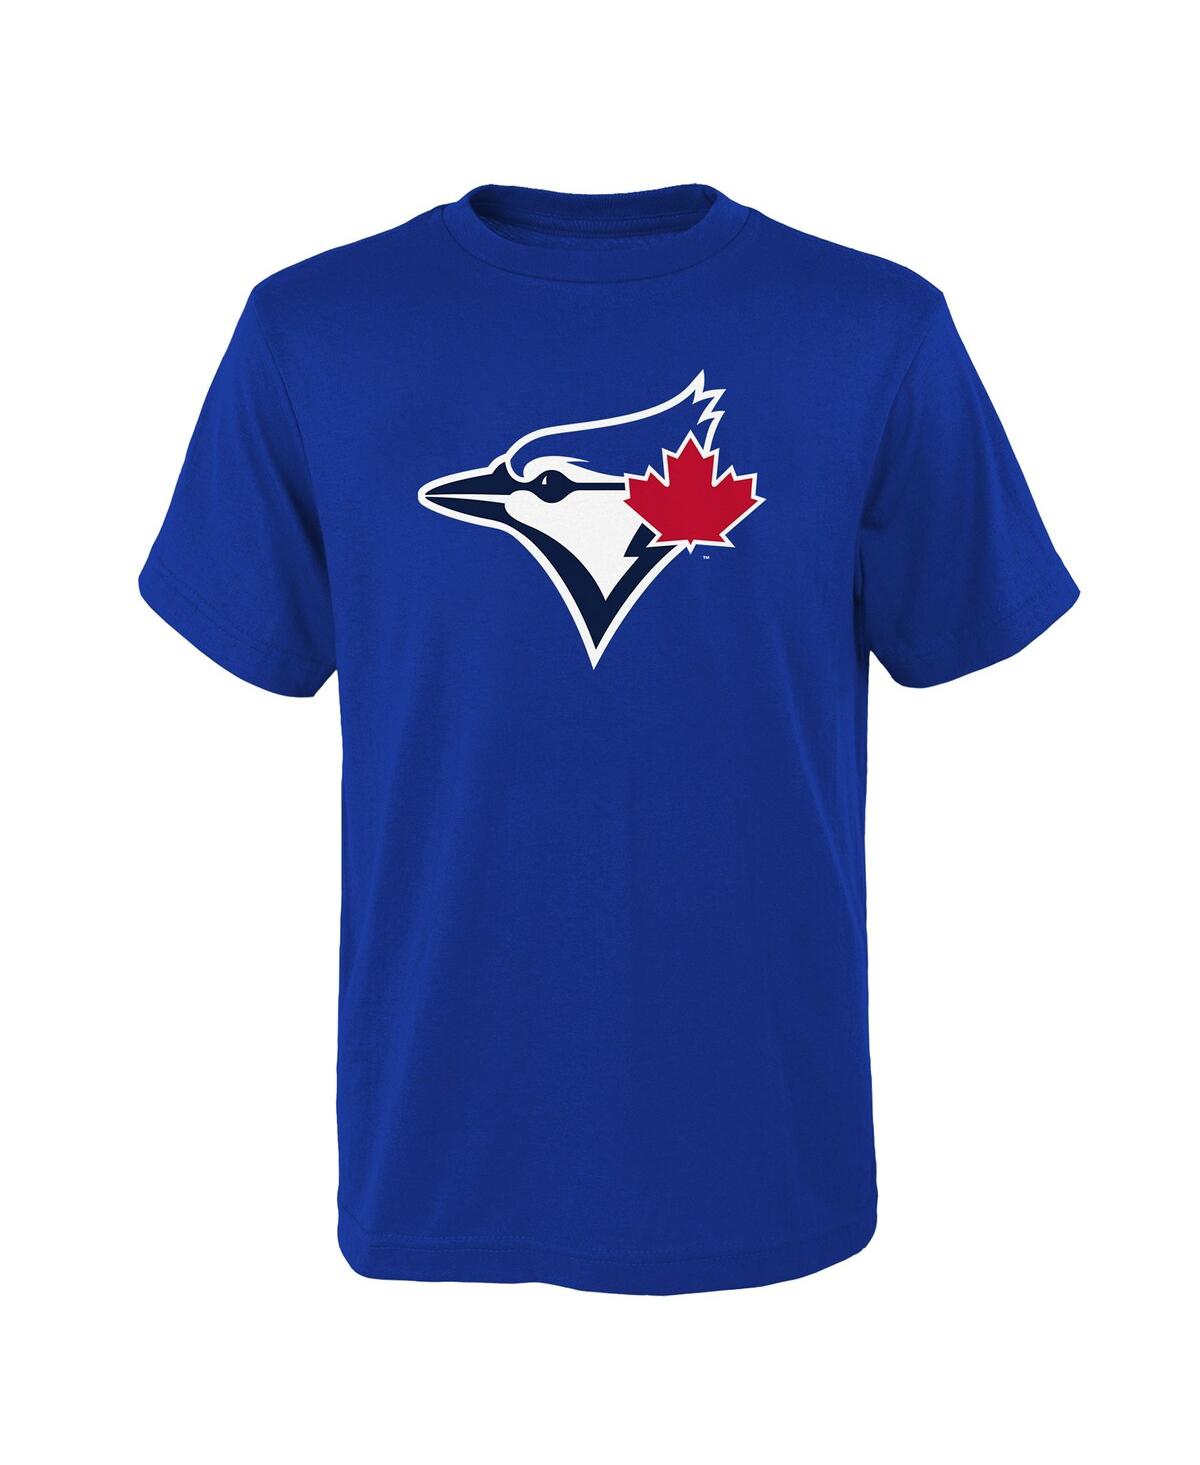 Outerstuff Kids' Big Boys And Girls Royal Toronto Blue Jays Logo Primary Team T-shirt